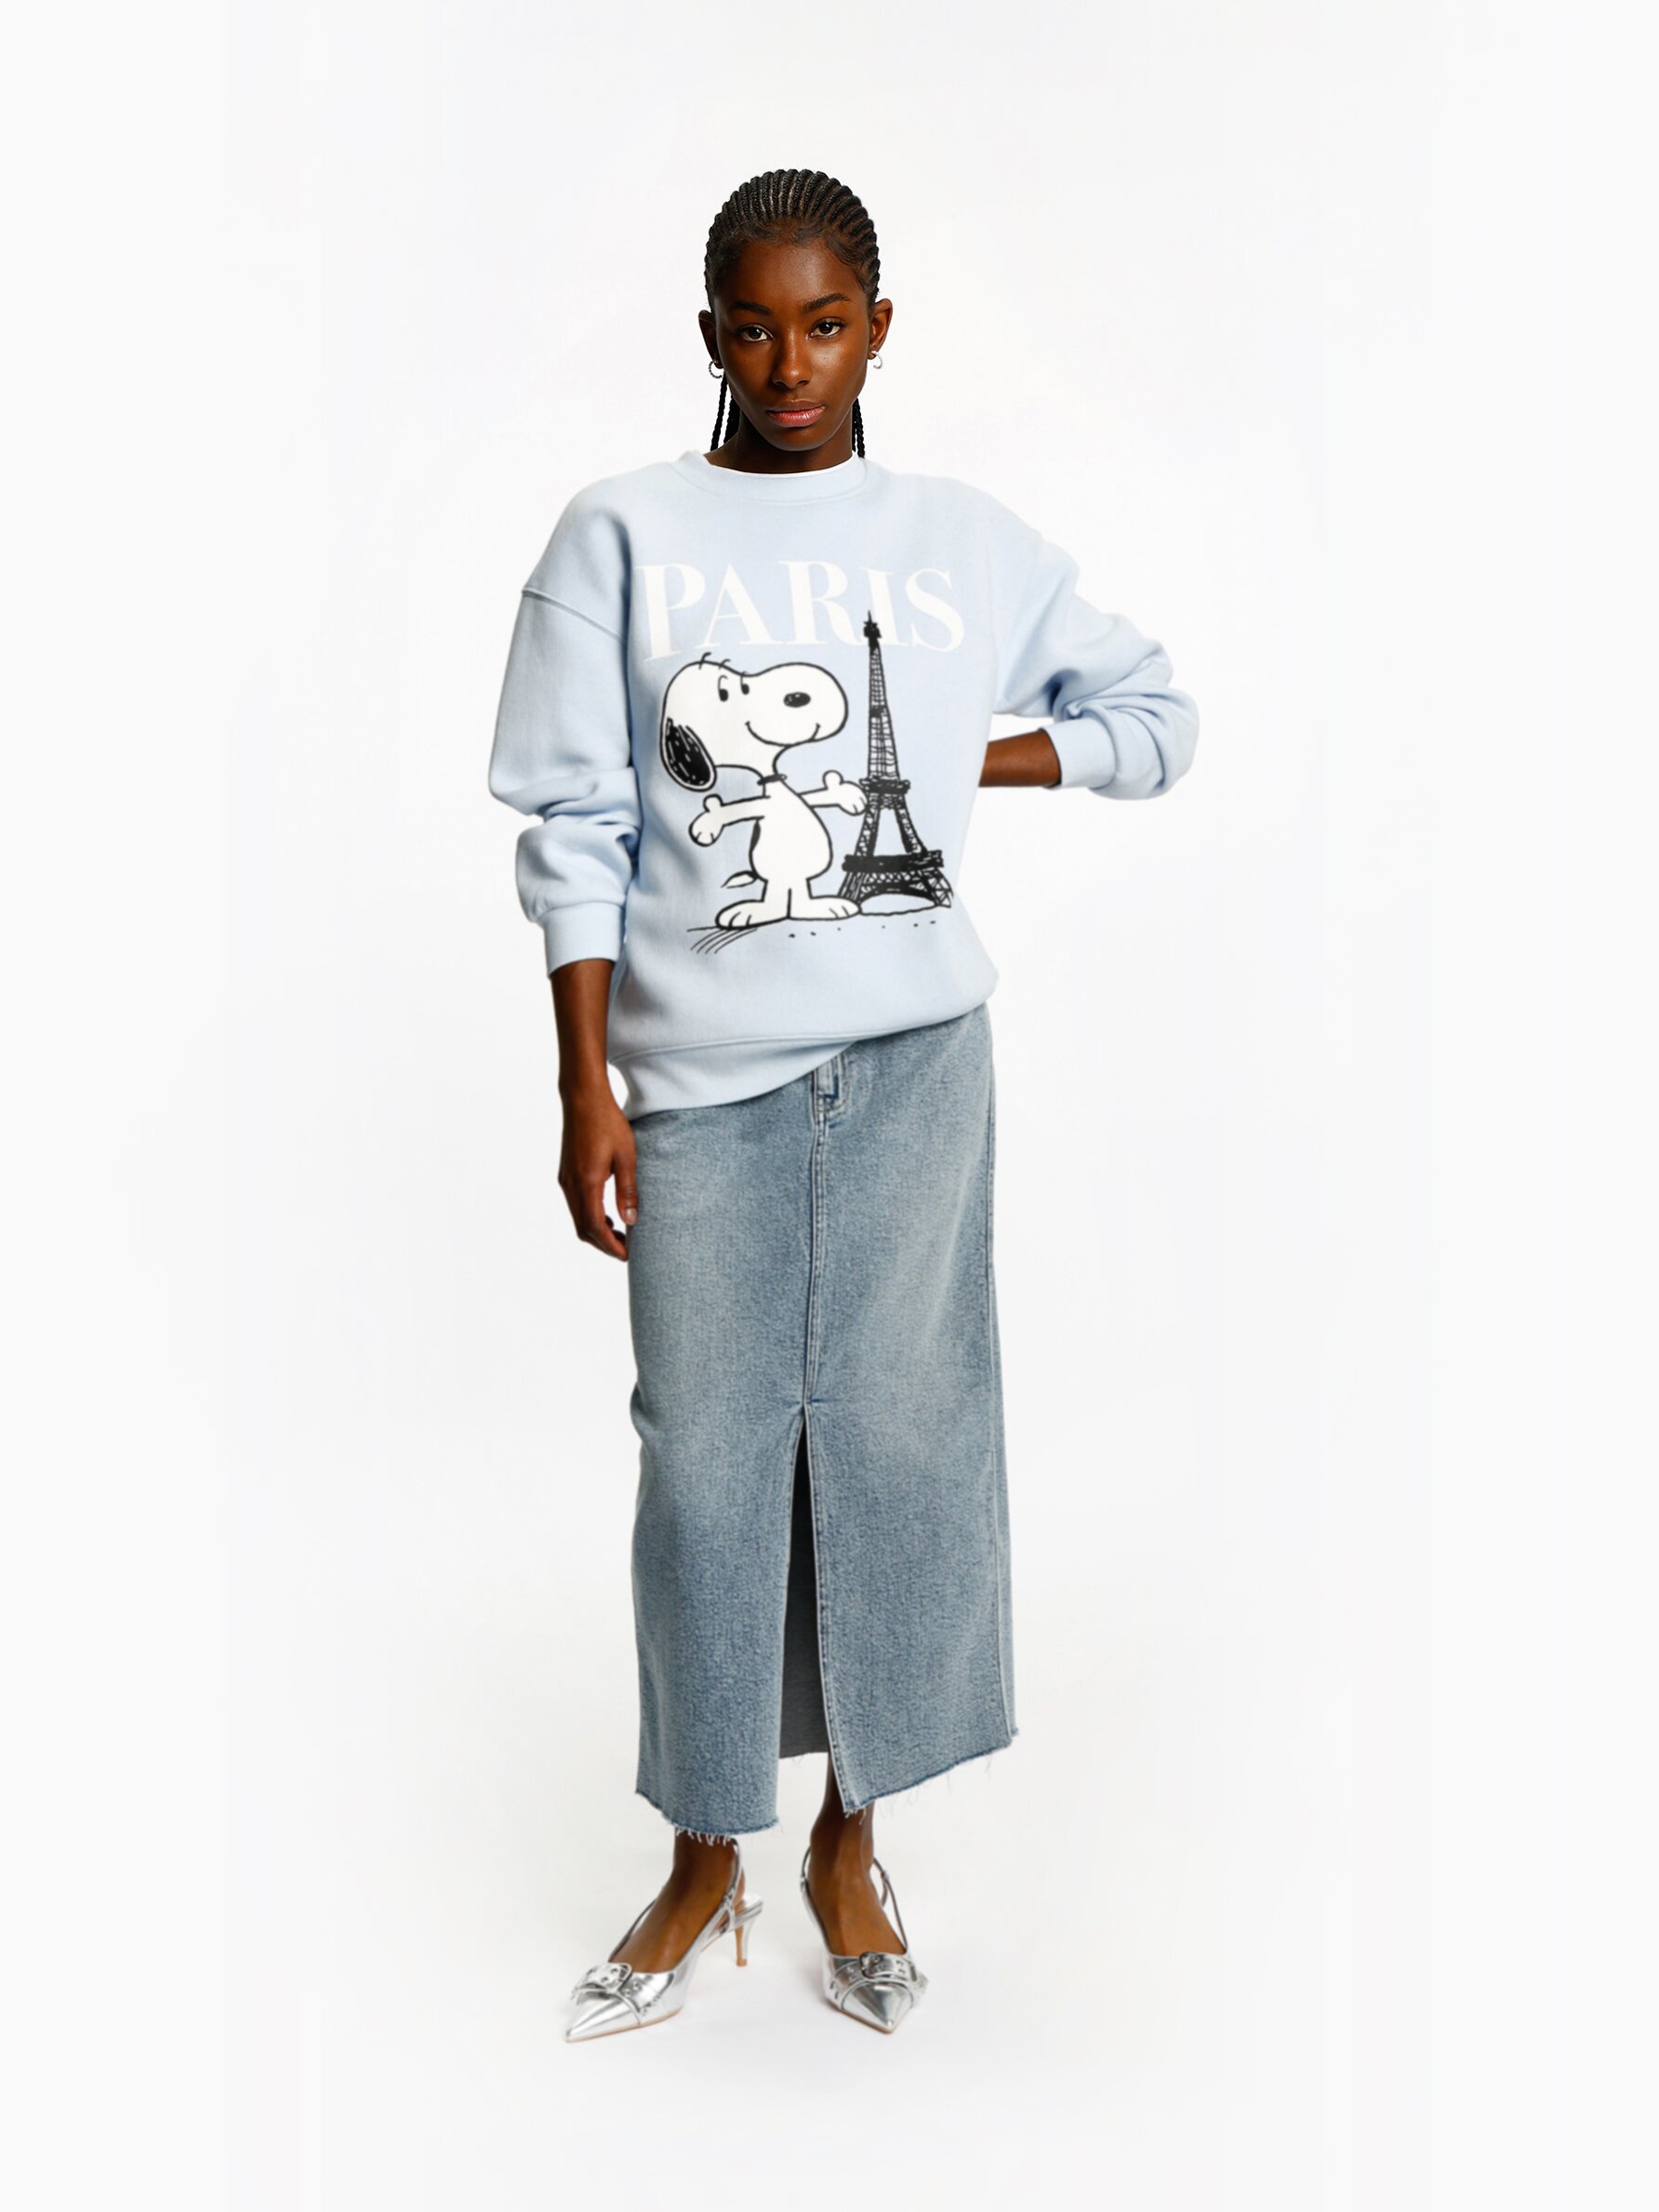 Snoopy Peanuts ™ sweatshirt - Collabs - CLOTHING - Woman 